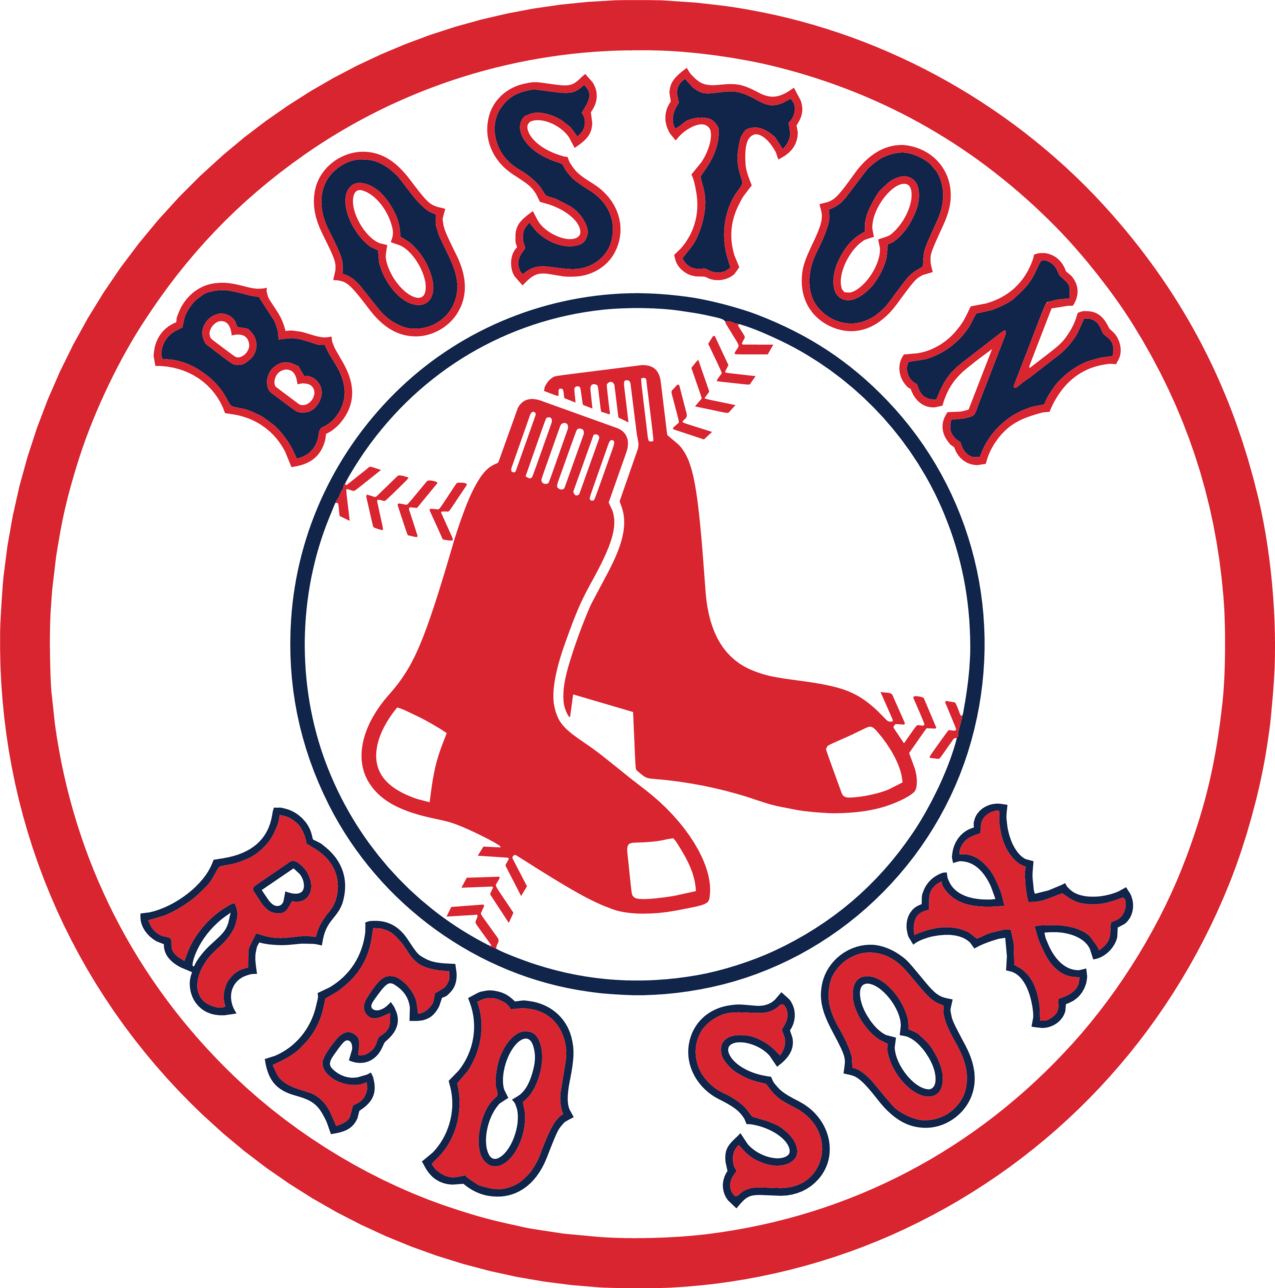 bostonredsox,红袜队,标识